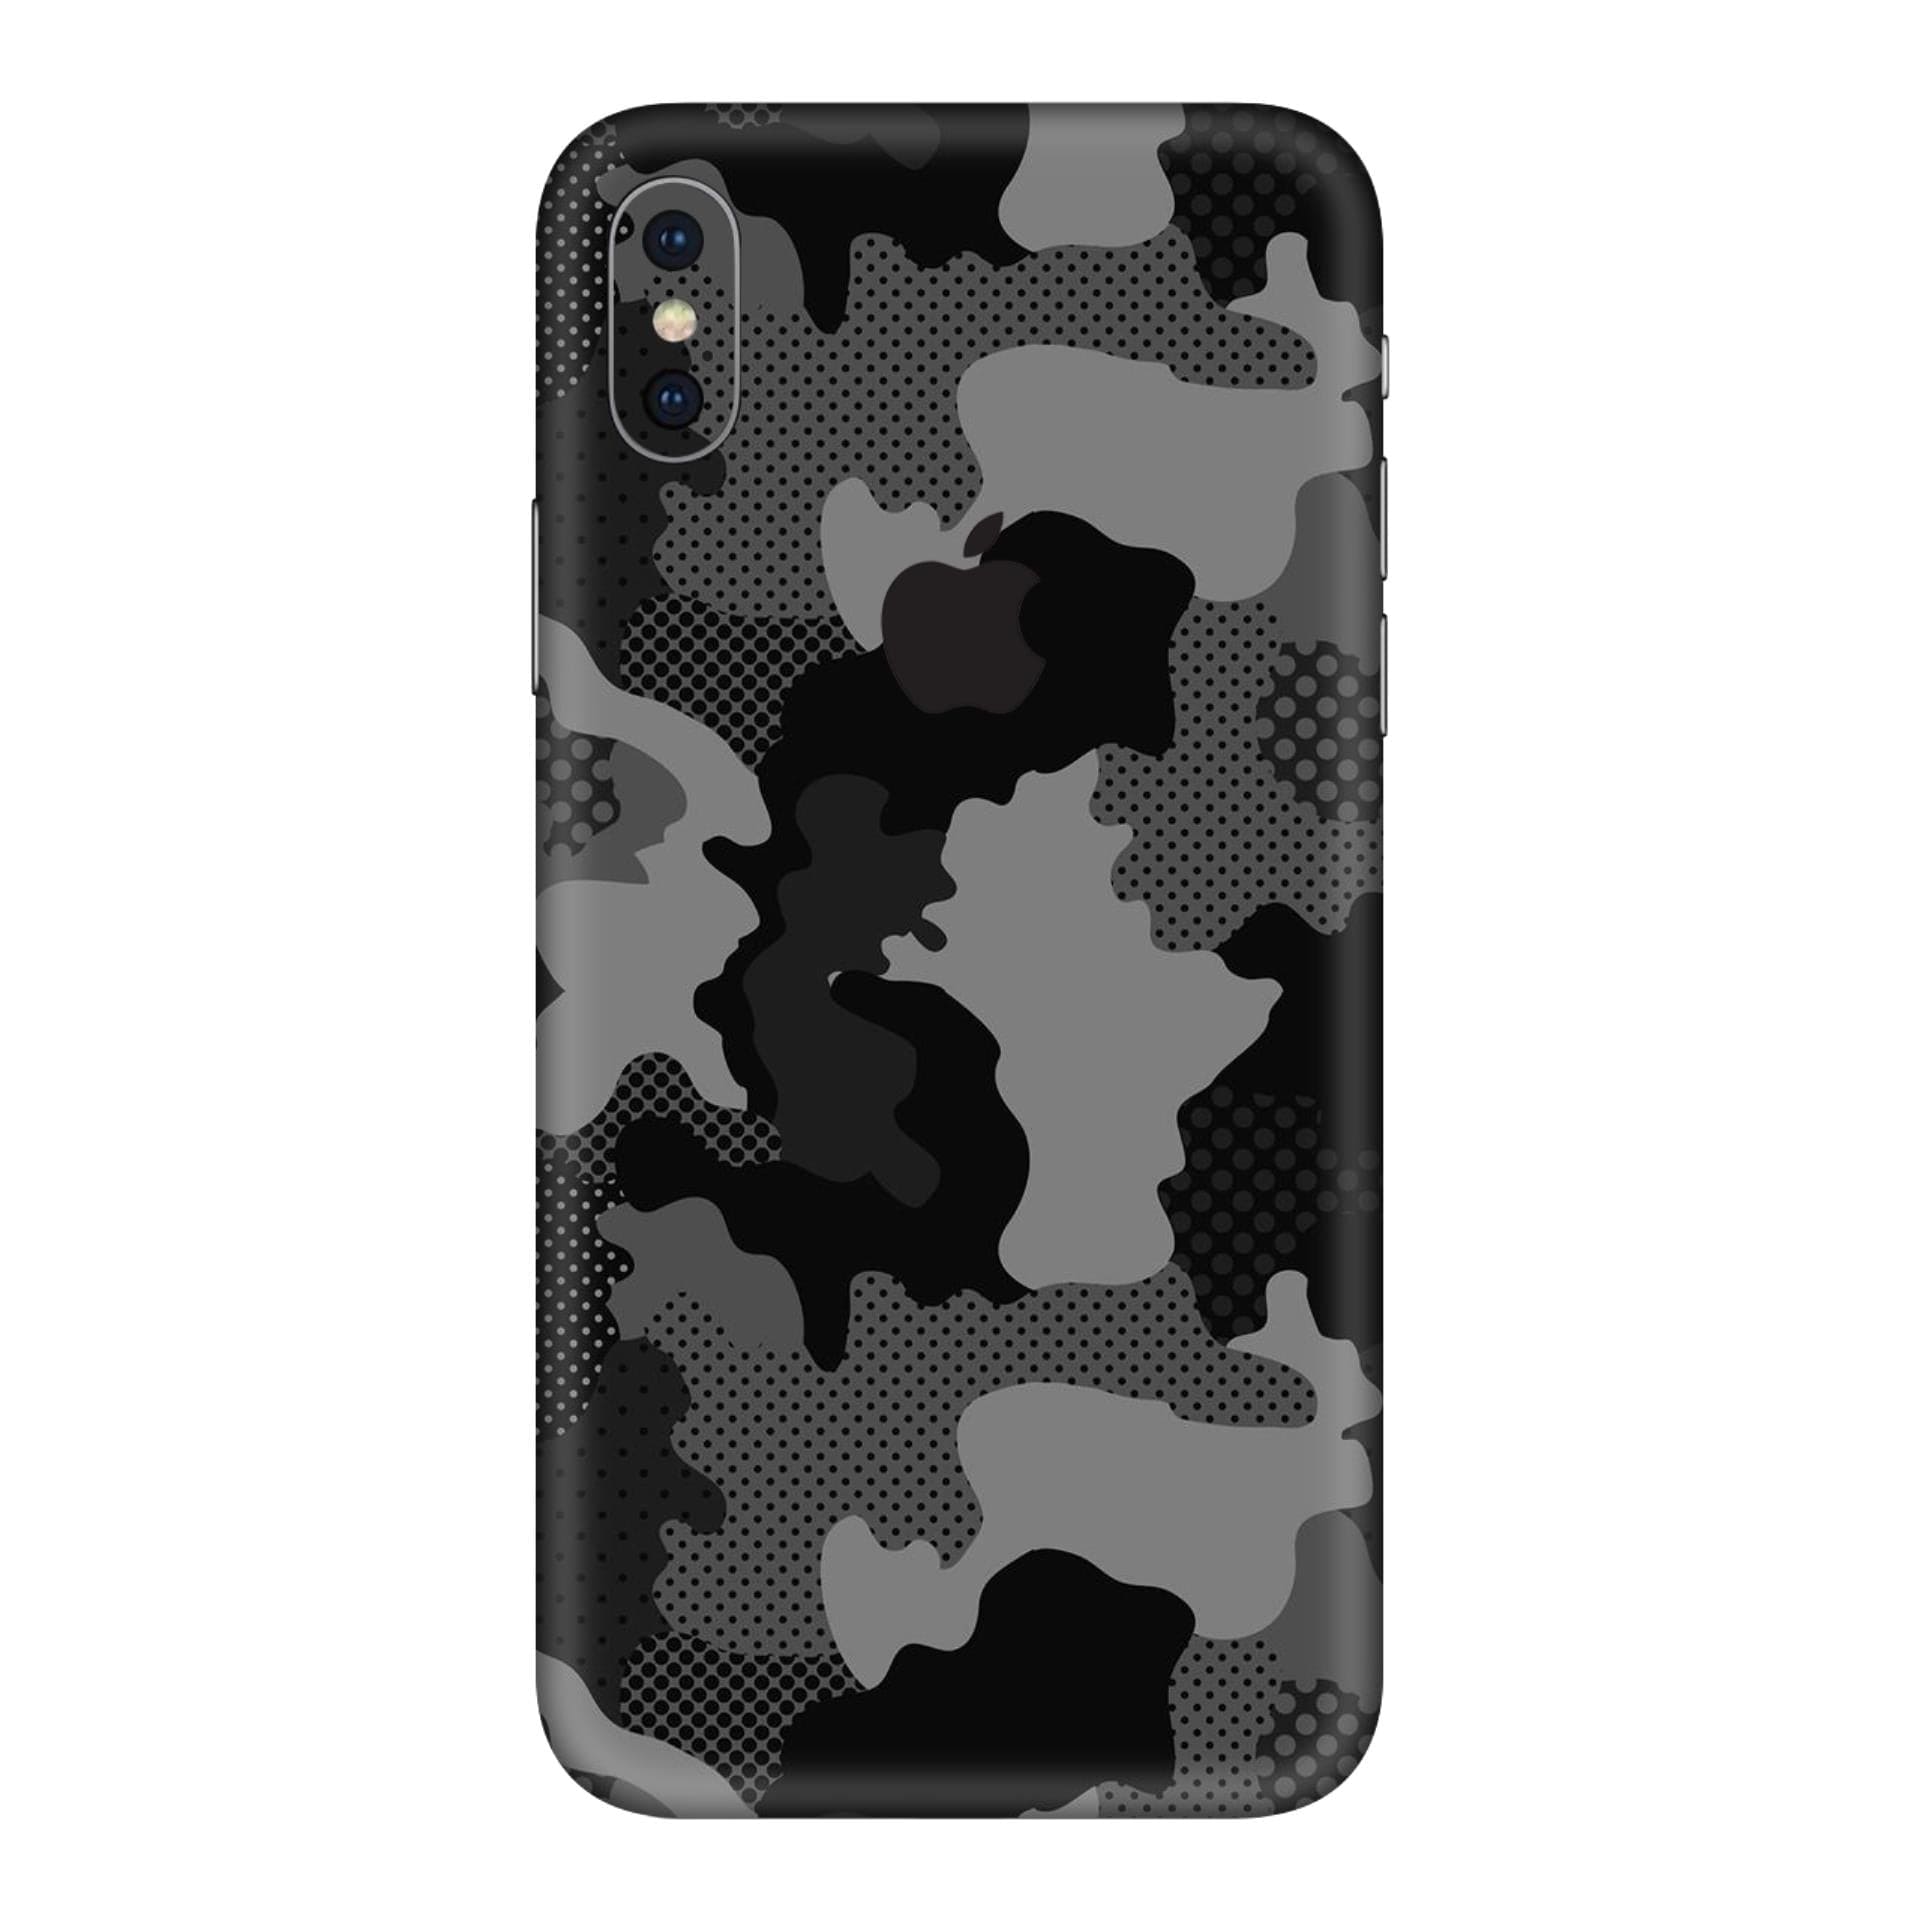 iphone XS Max Military Black Camo skins